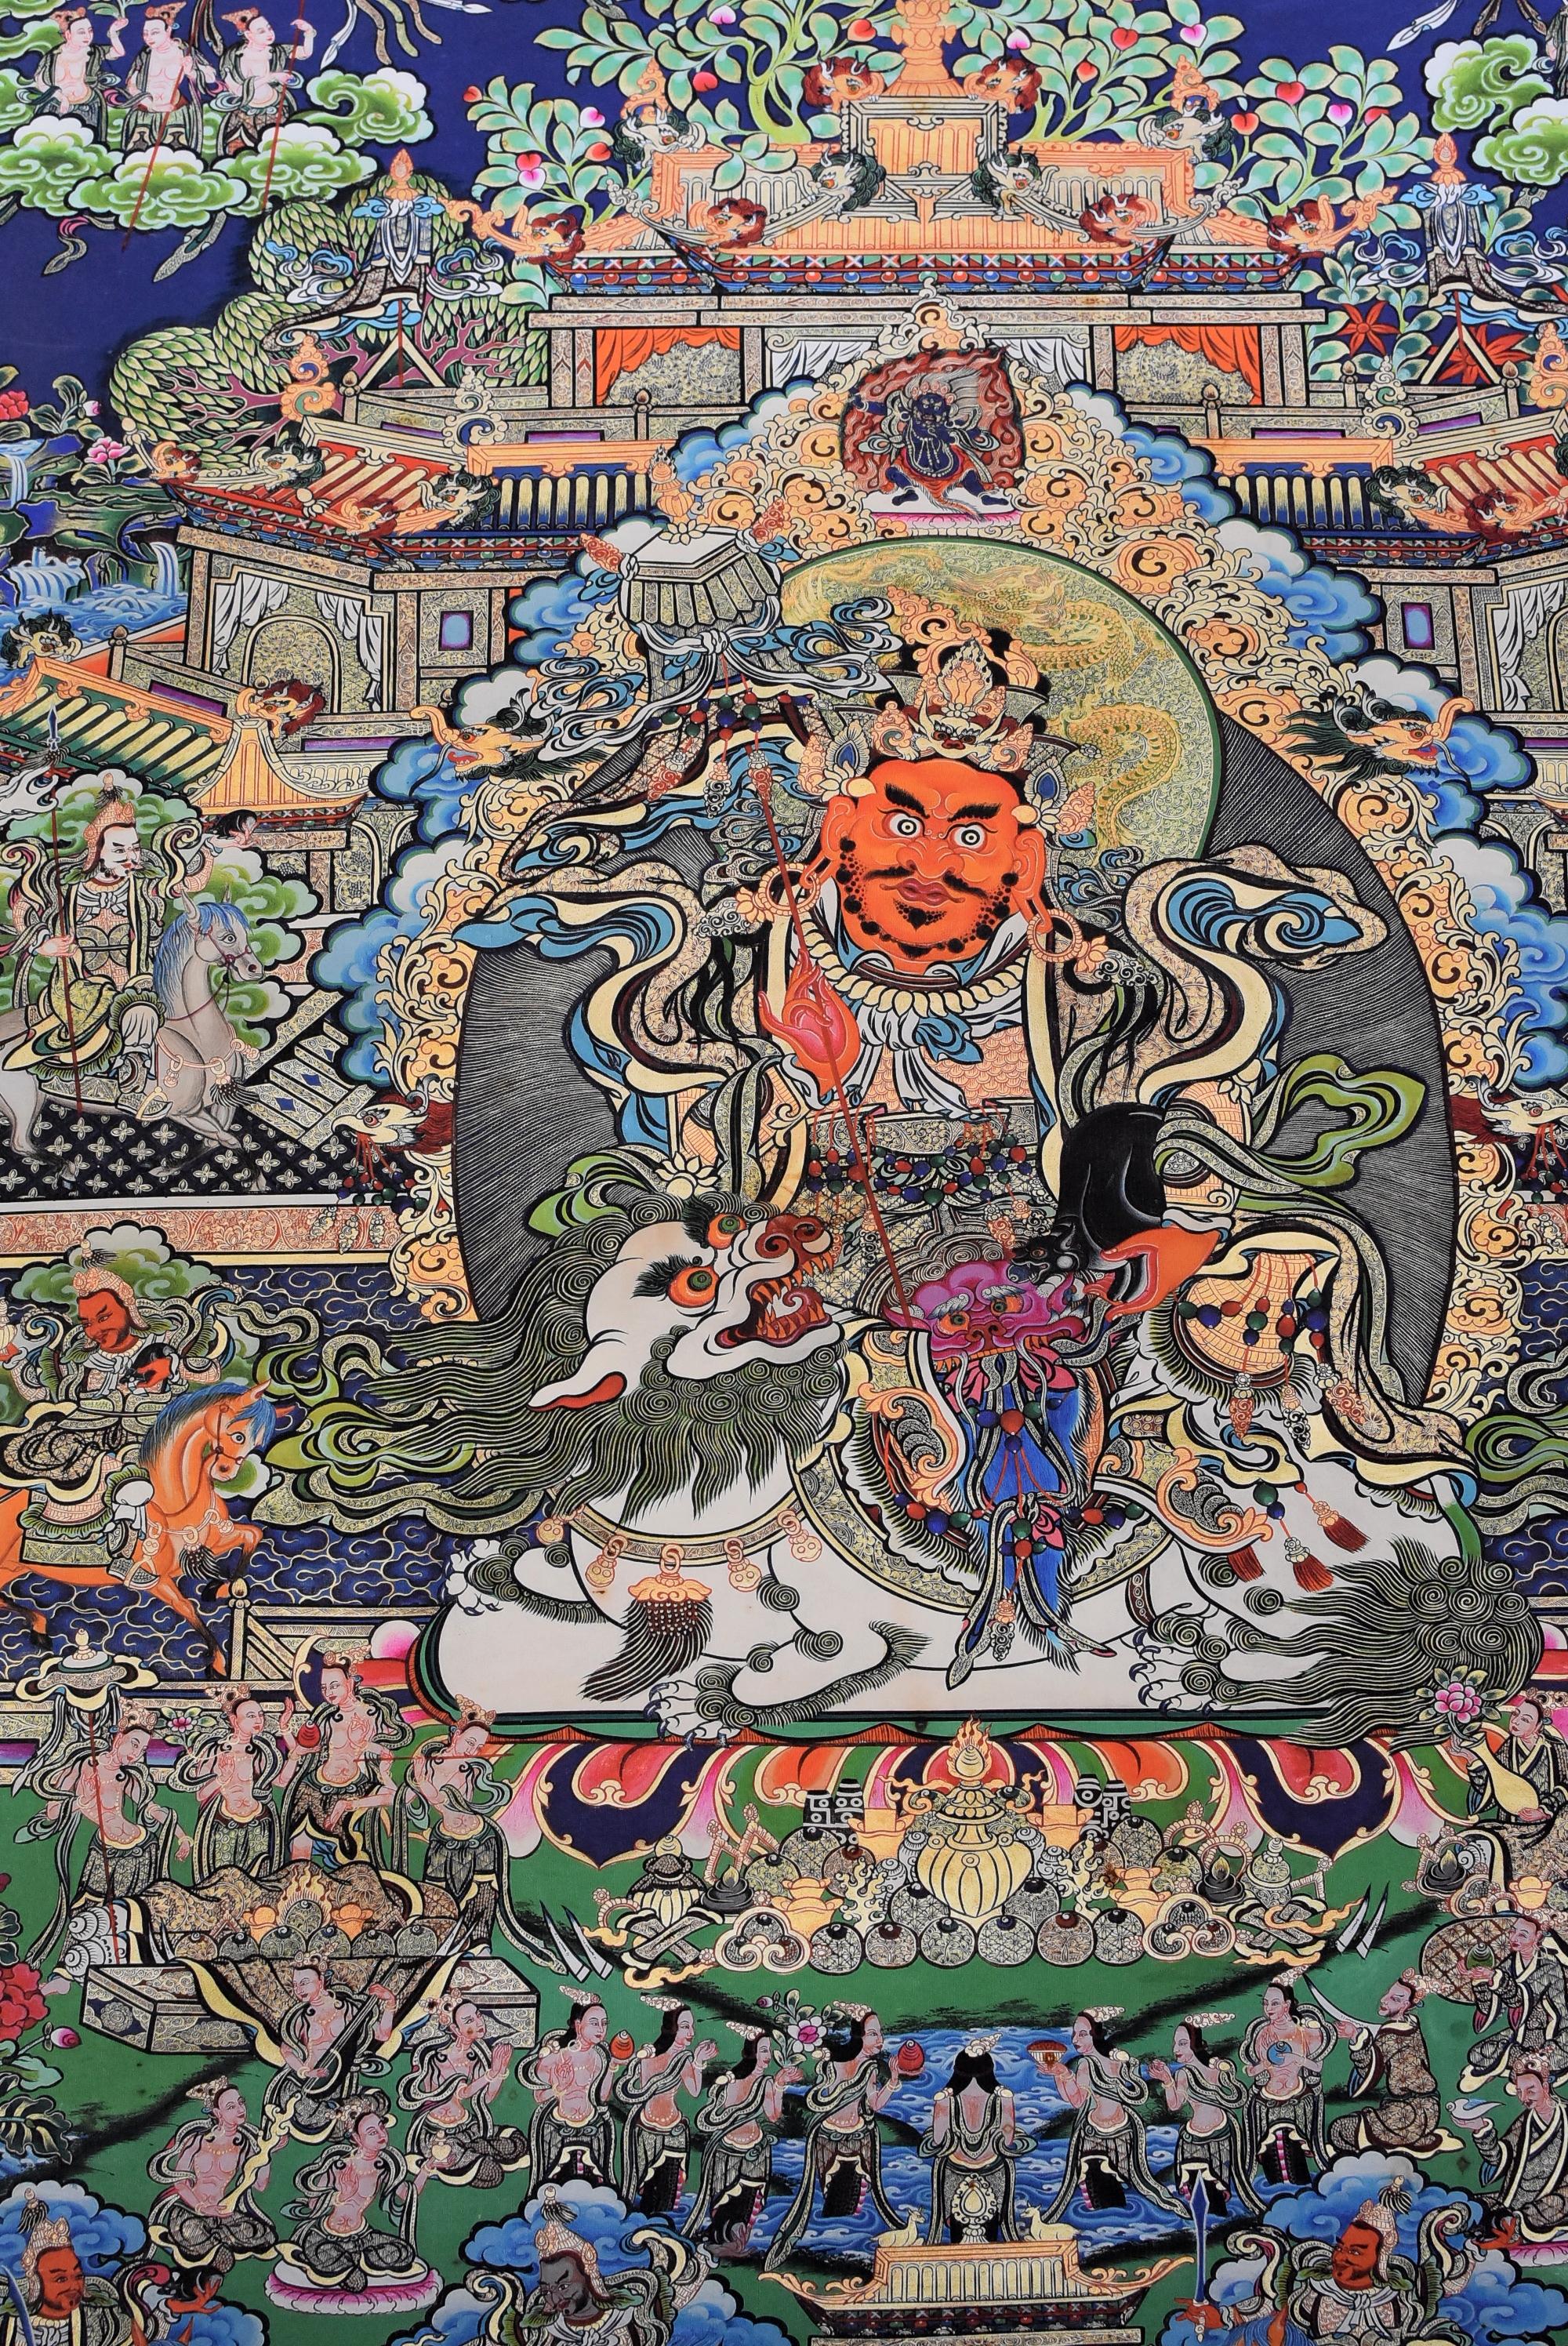 Hand-Painted Tibetan Thangka Painting, Dorje Drolo Thanka